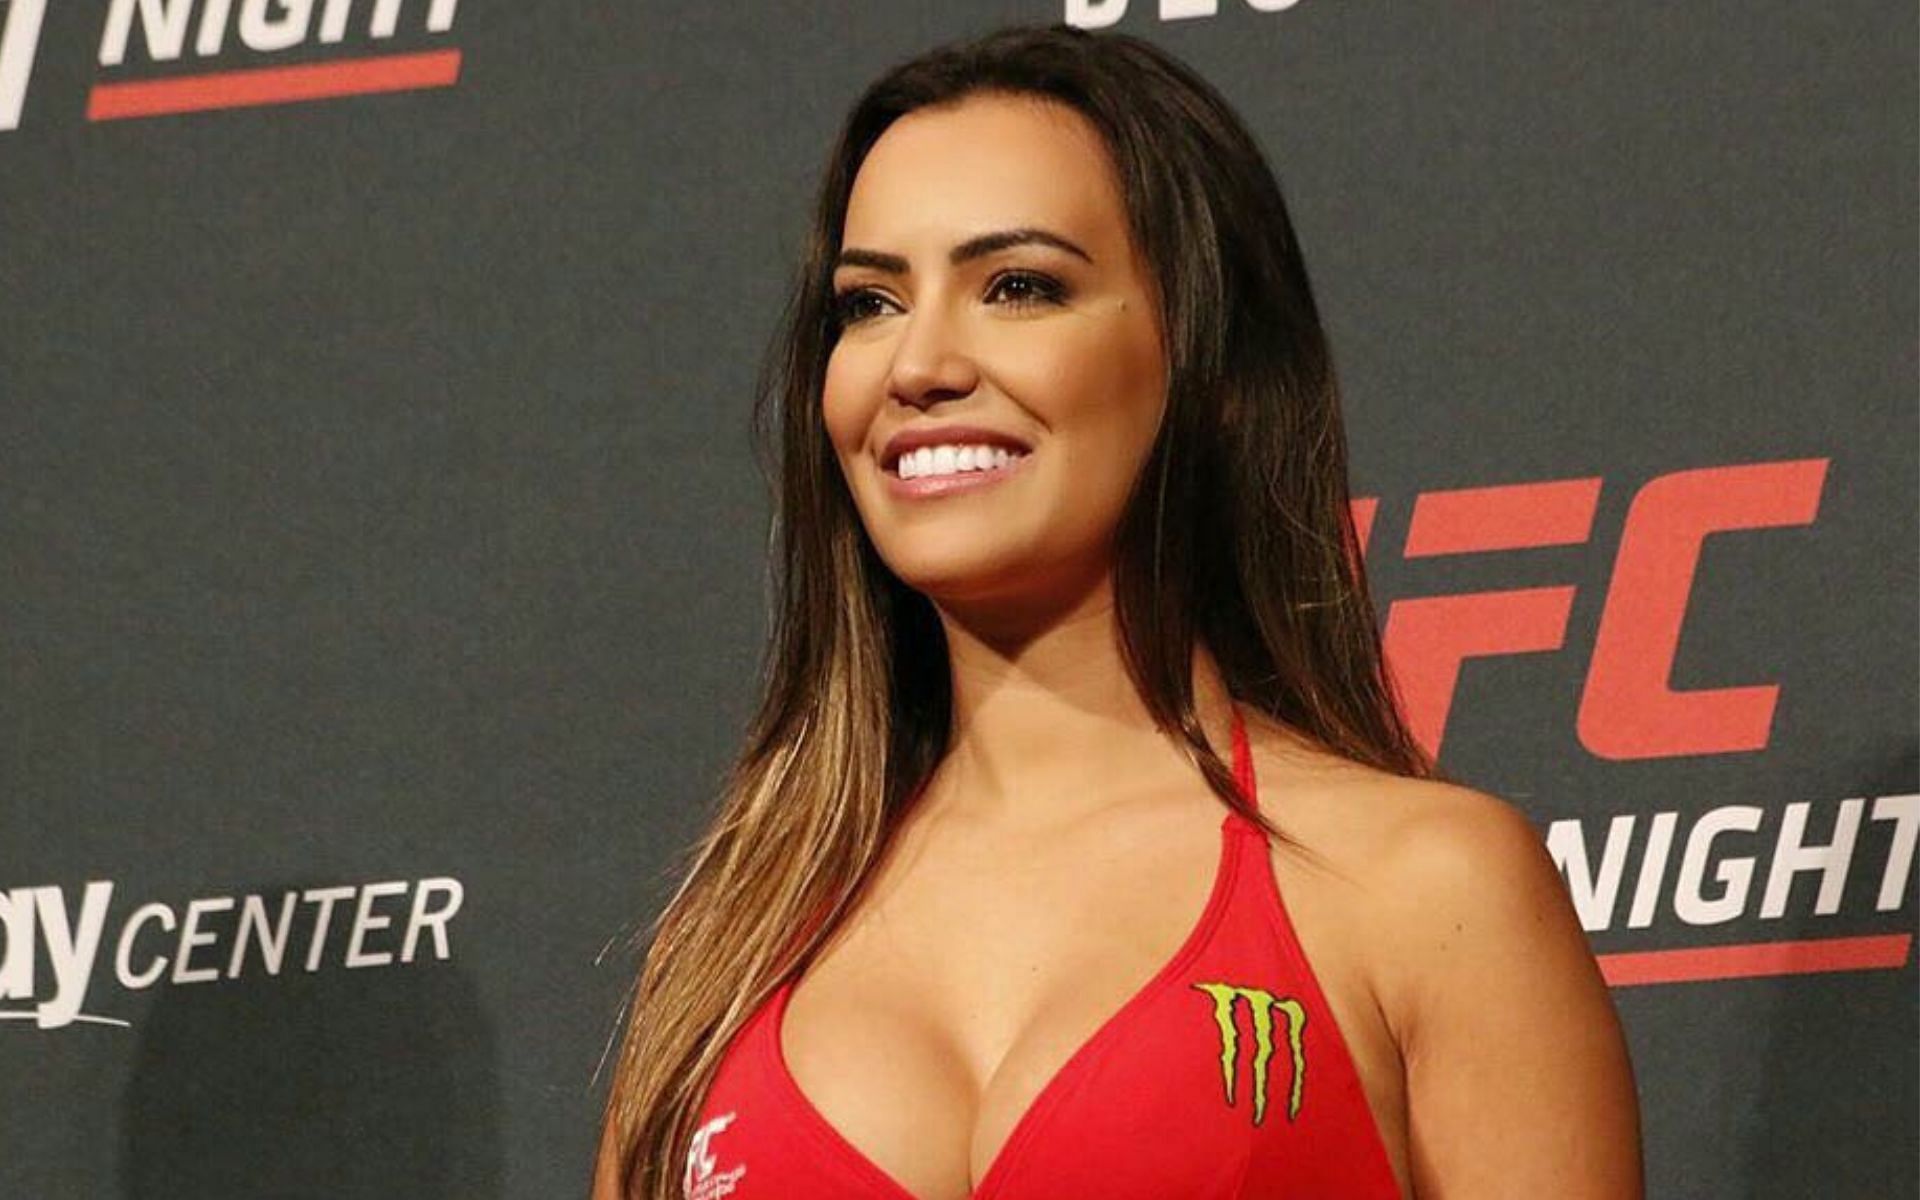 UFC ring girl Luciana Andrade [Image courtesy @lucianaandrade on Instagram]